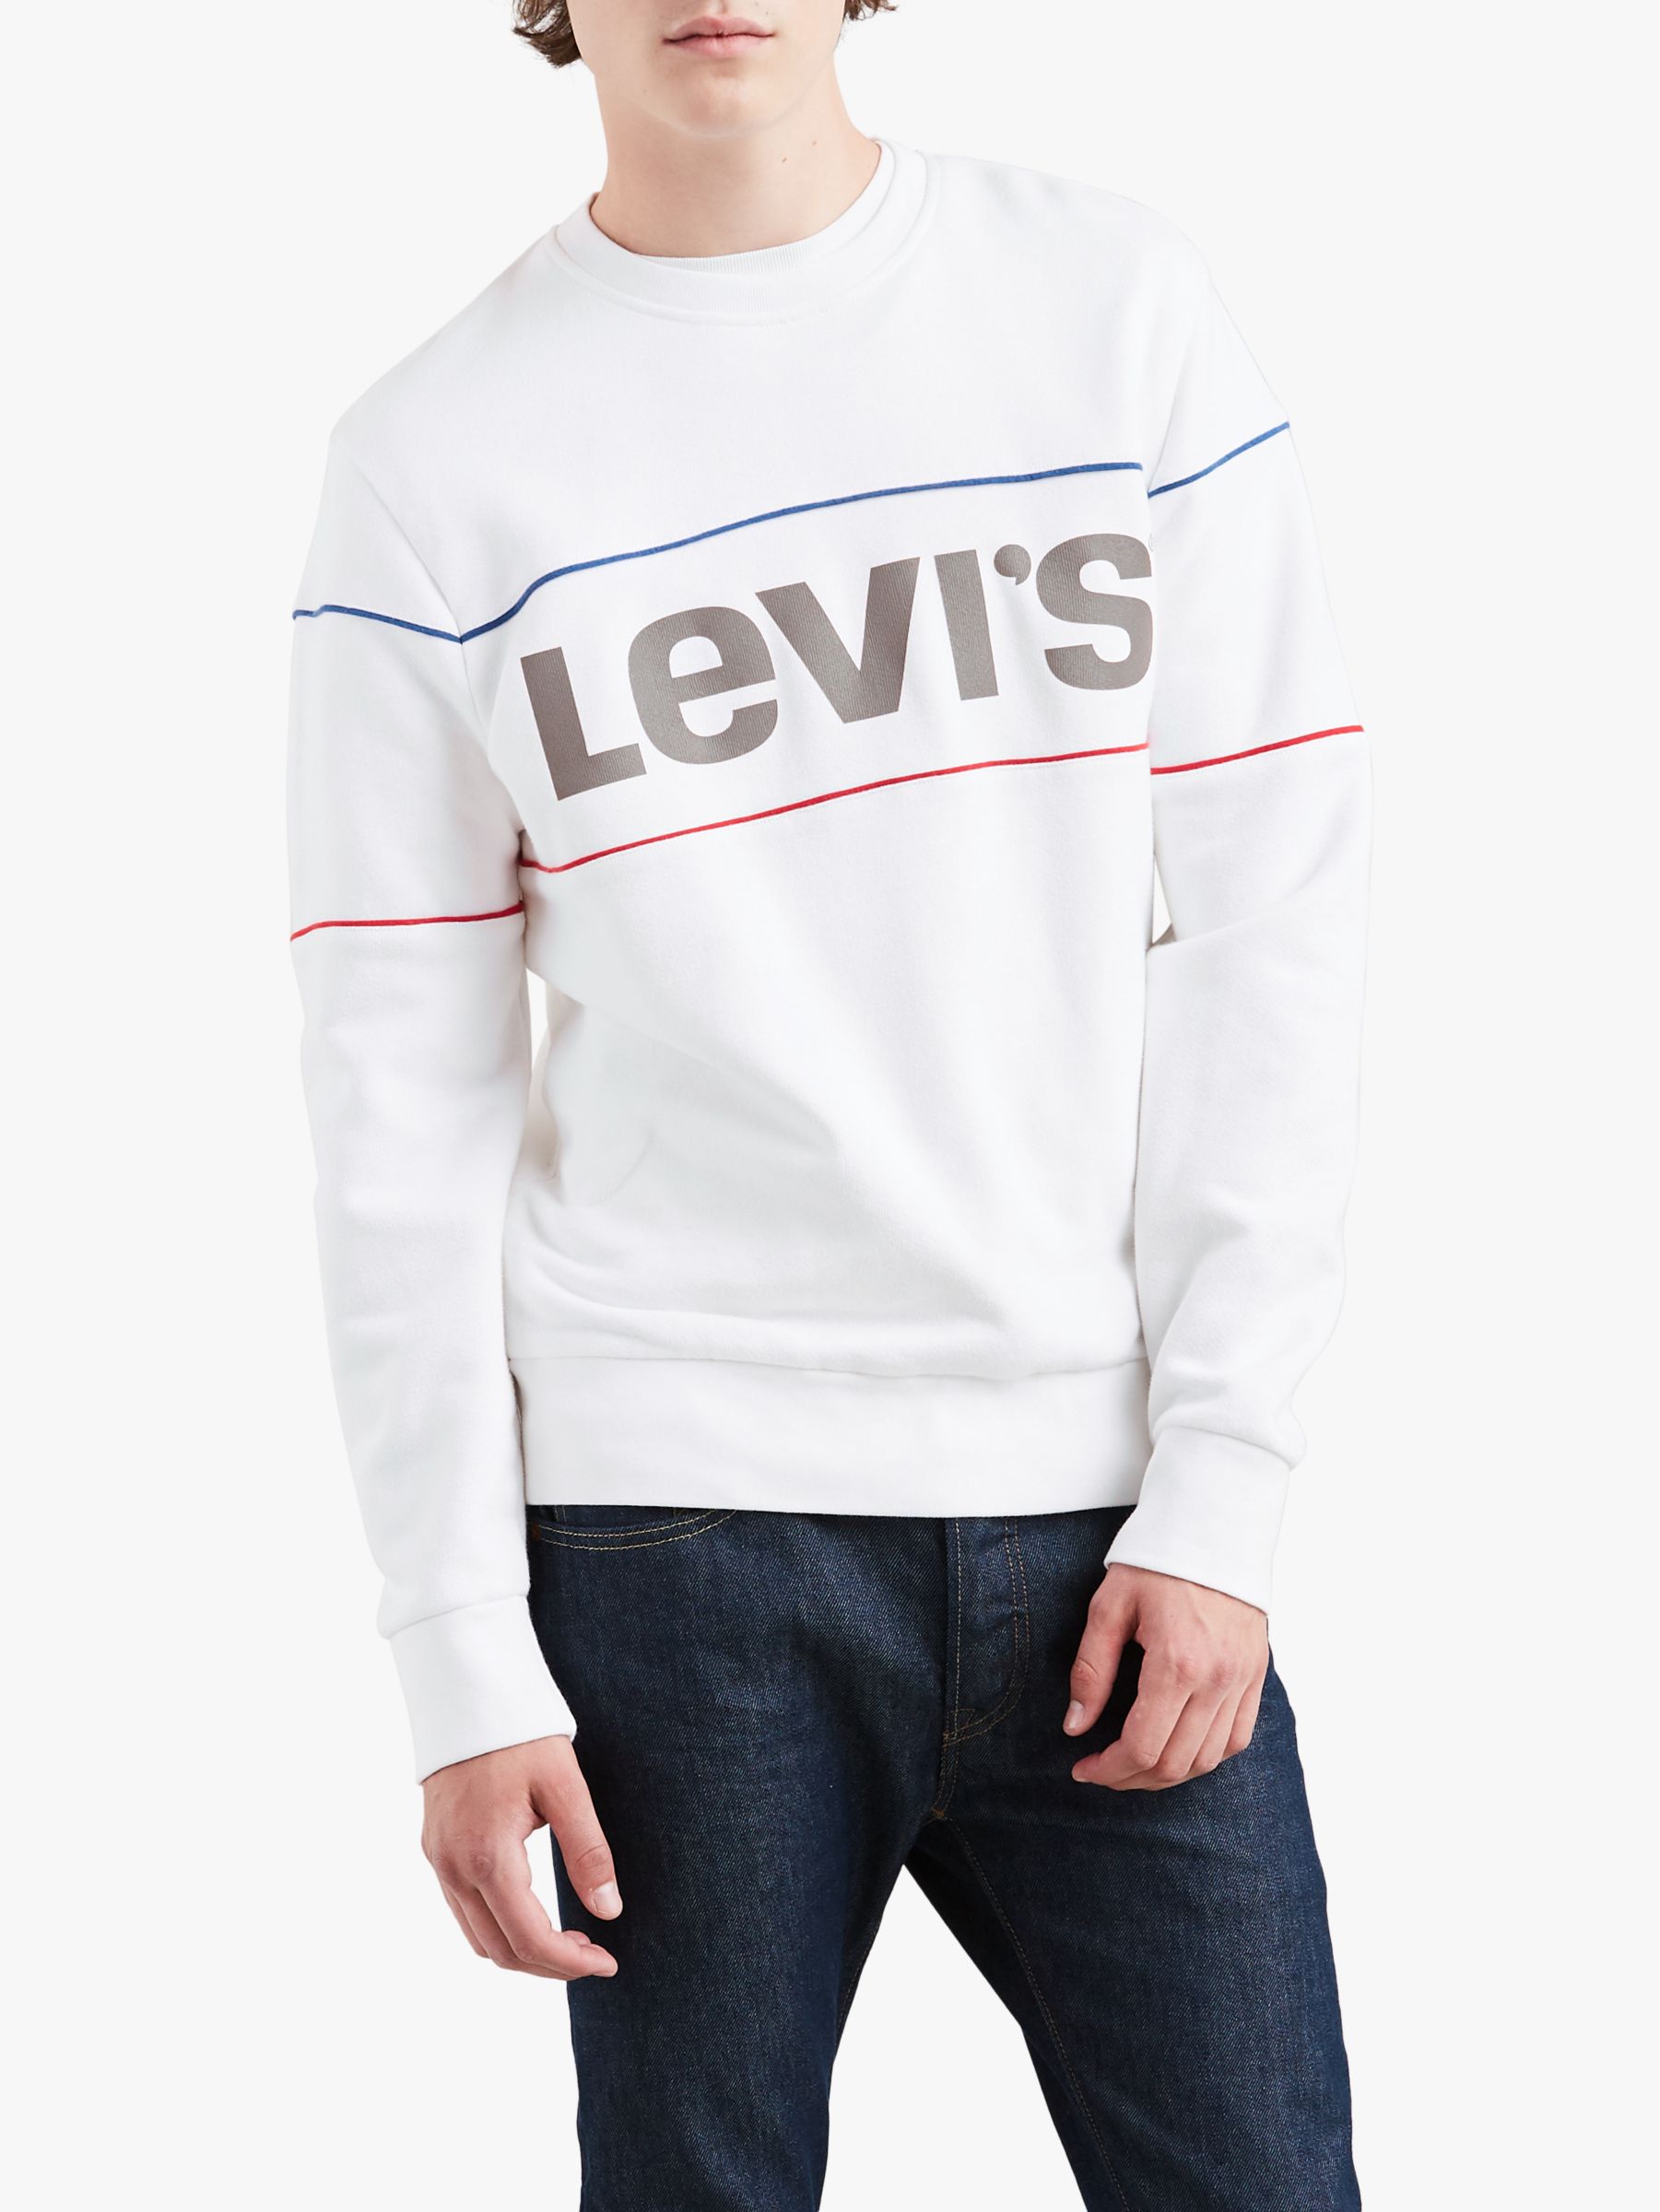 Levi's Reflective Sweatshirt, Piping White/Reflective